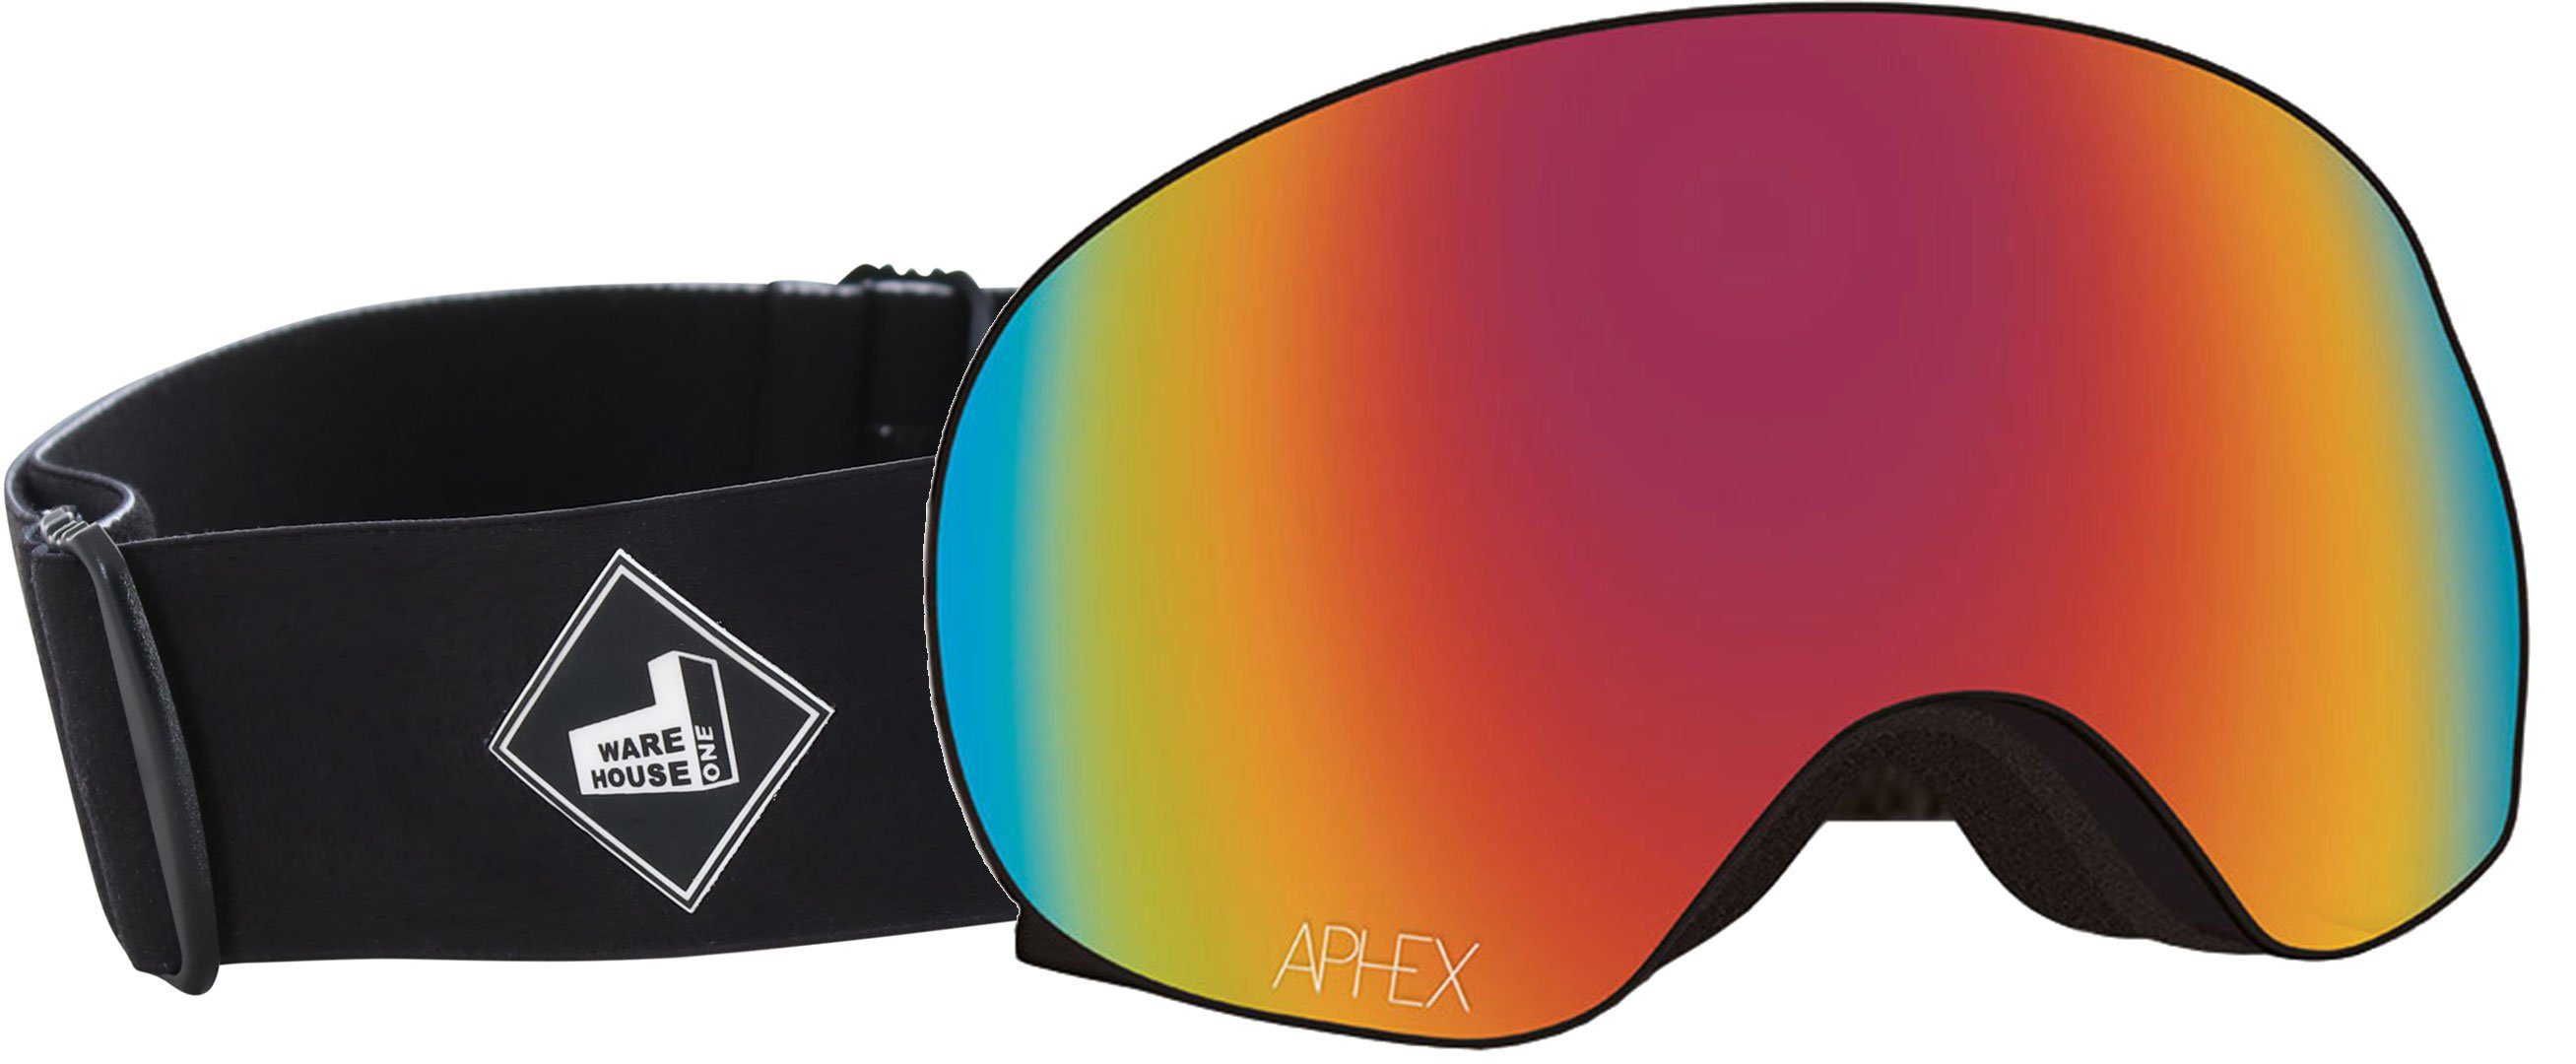 Aphex Snowboardbrille XPR + Magnet Schneebrille black THE APHEX strap EDITION ONE Glas